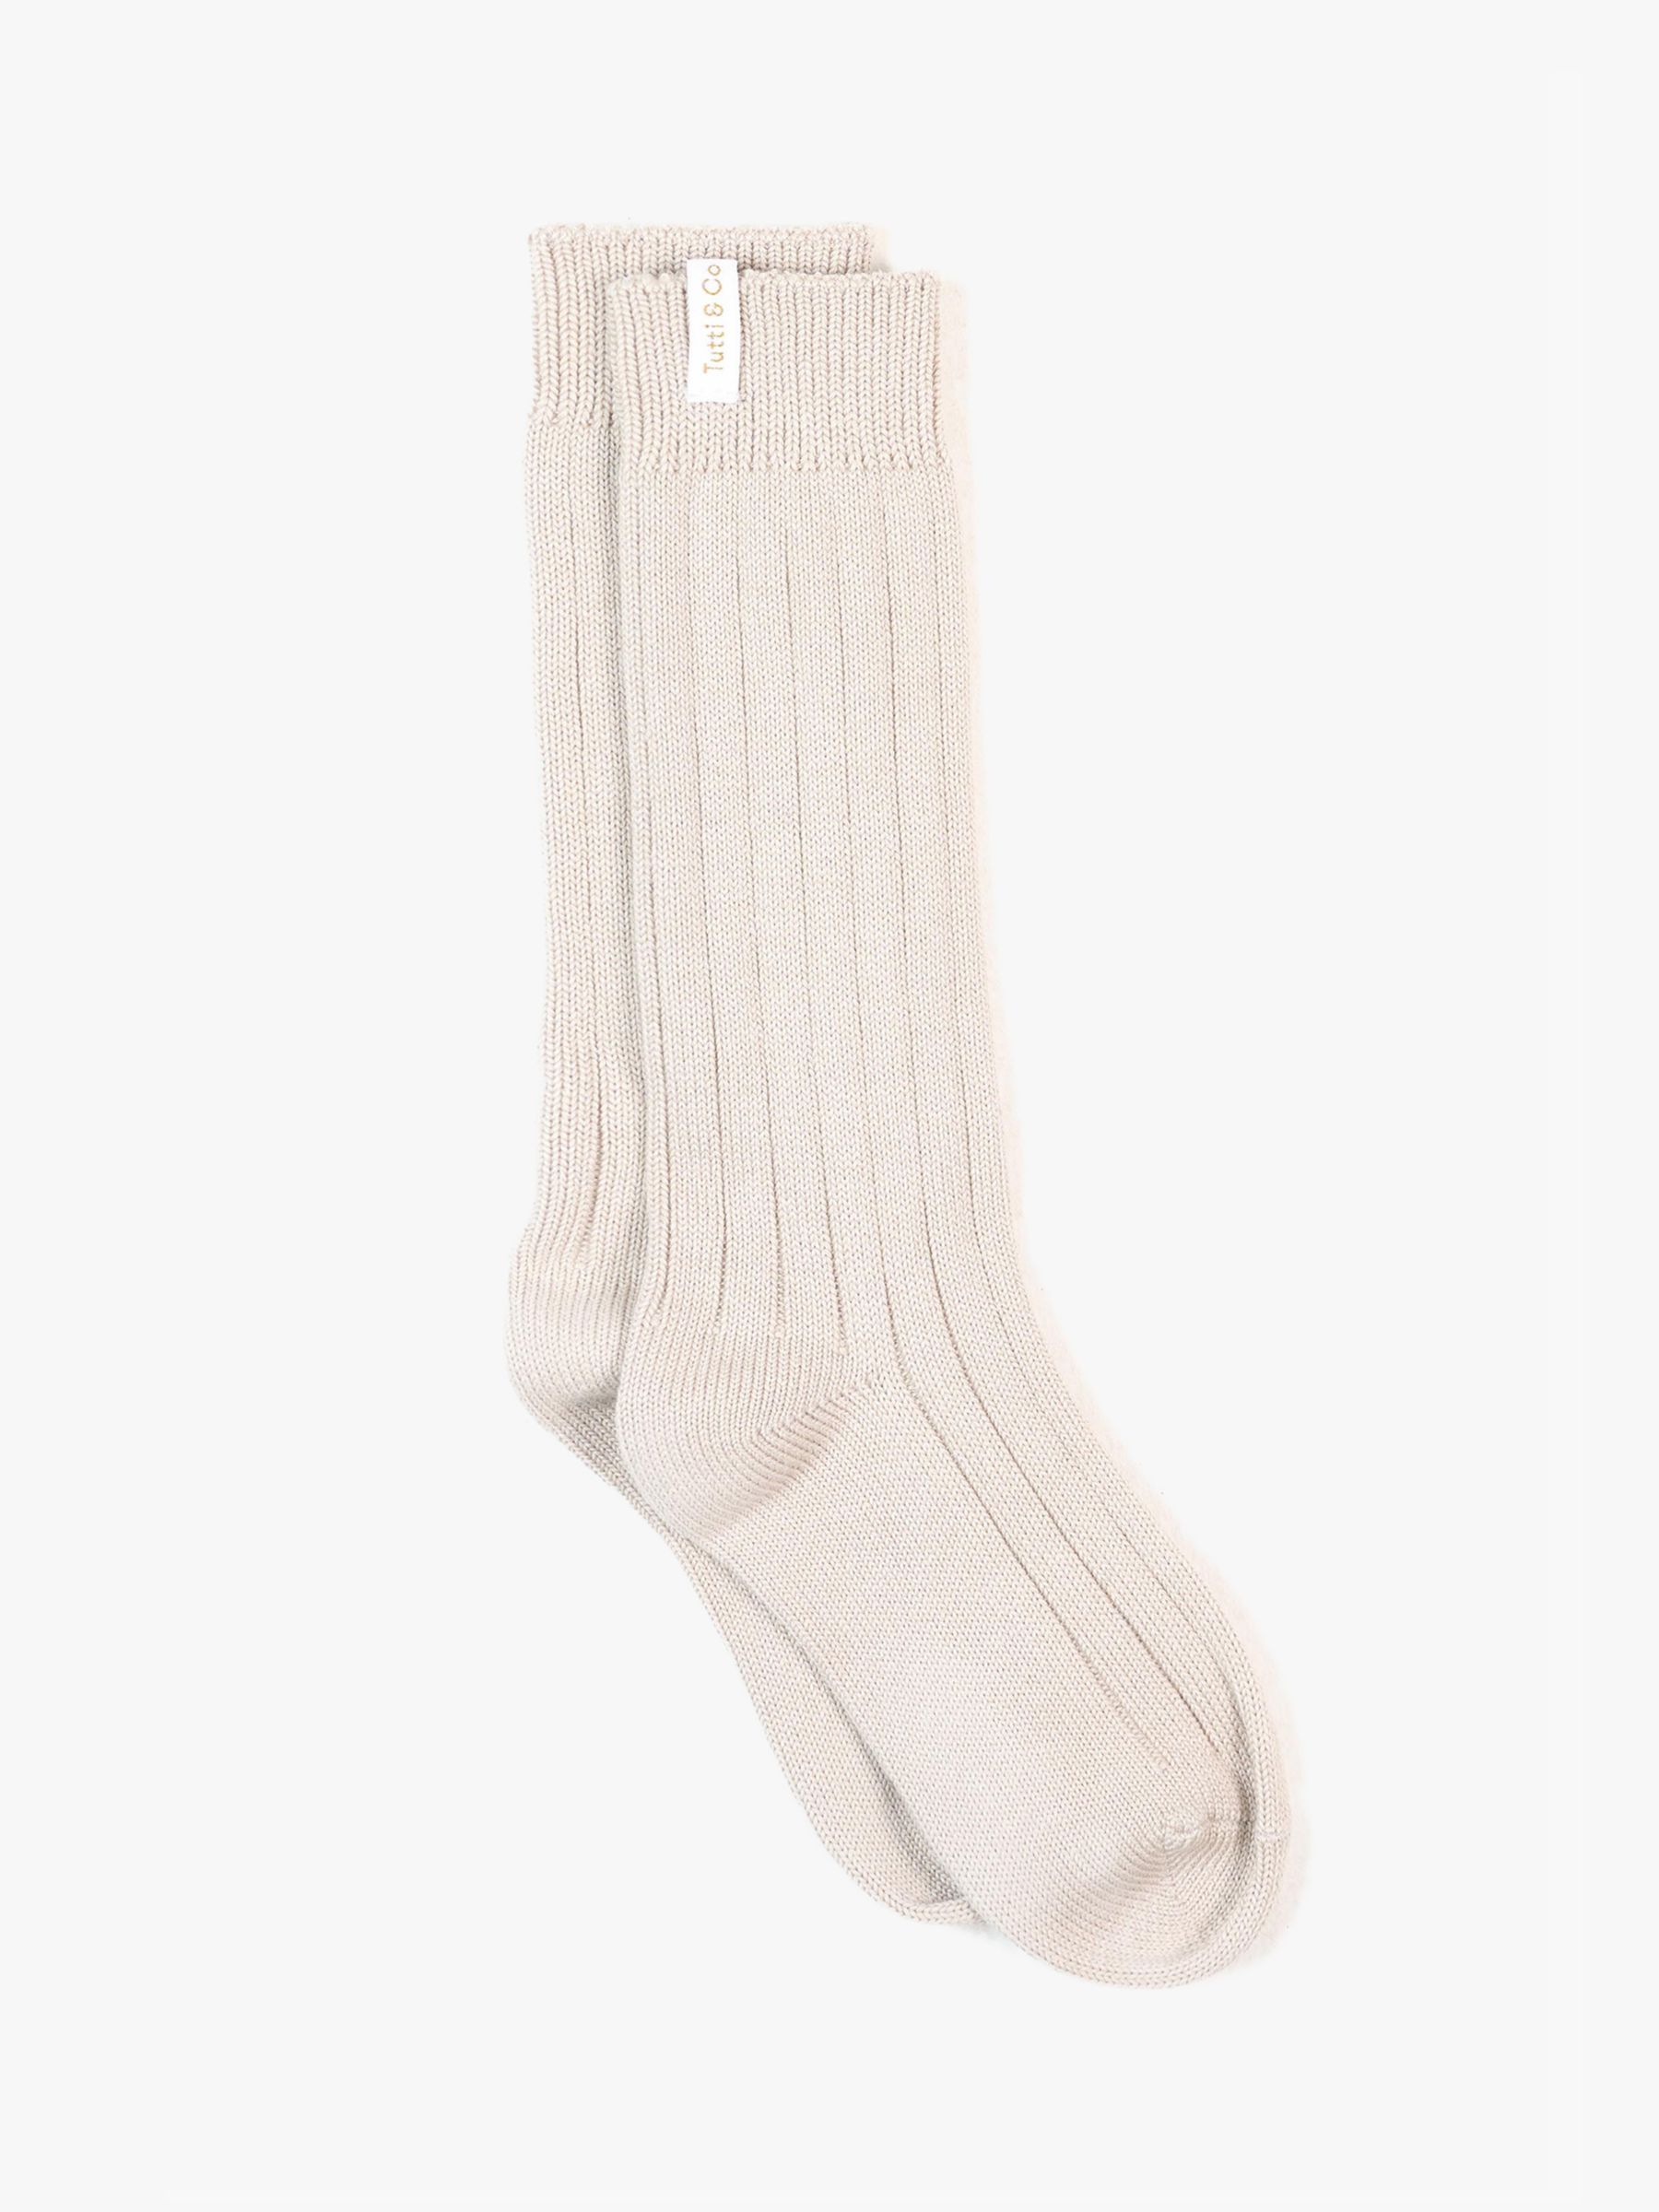 Tutti & Co Farne Plain Ribbed Long Socks, One Size, Stone at John Lewis ...